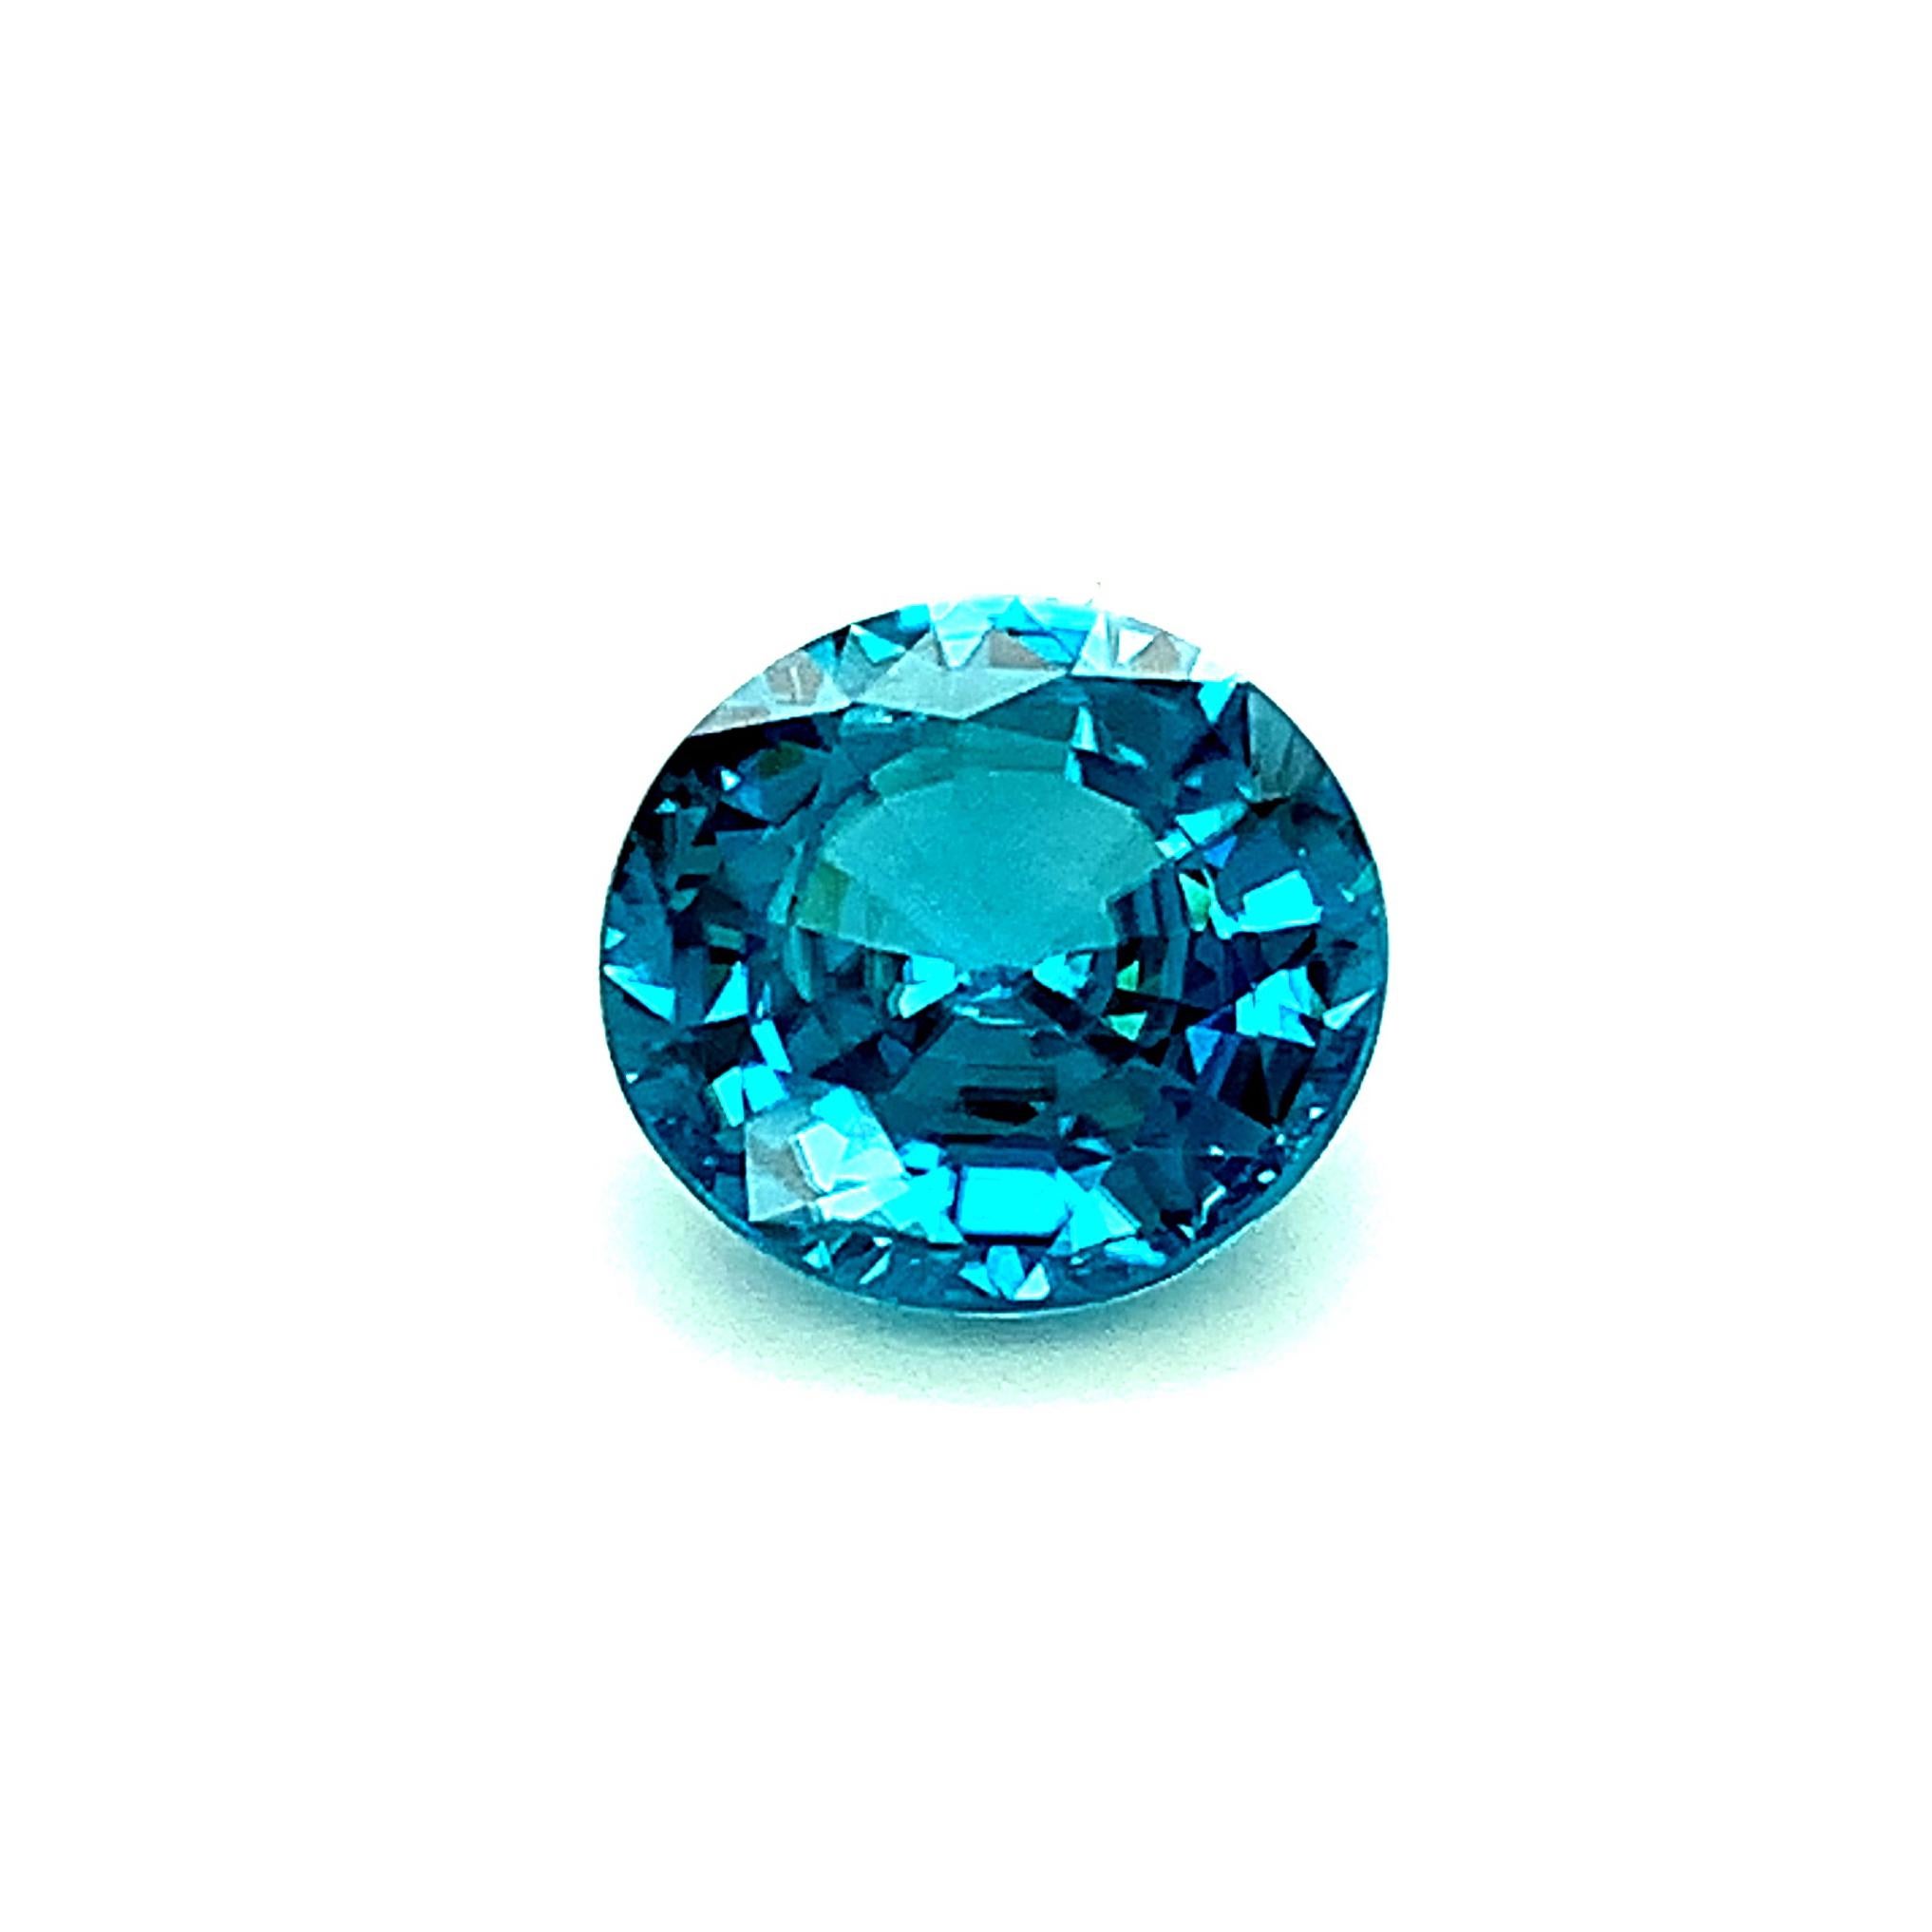 This blue zircon is a vivid, bright 